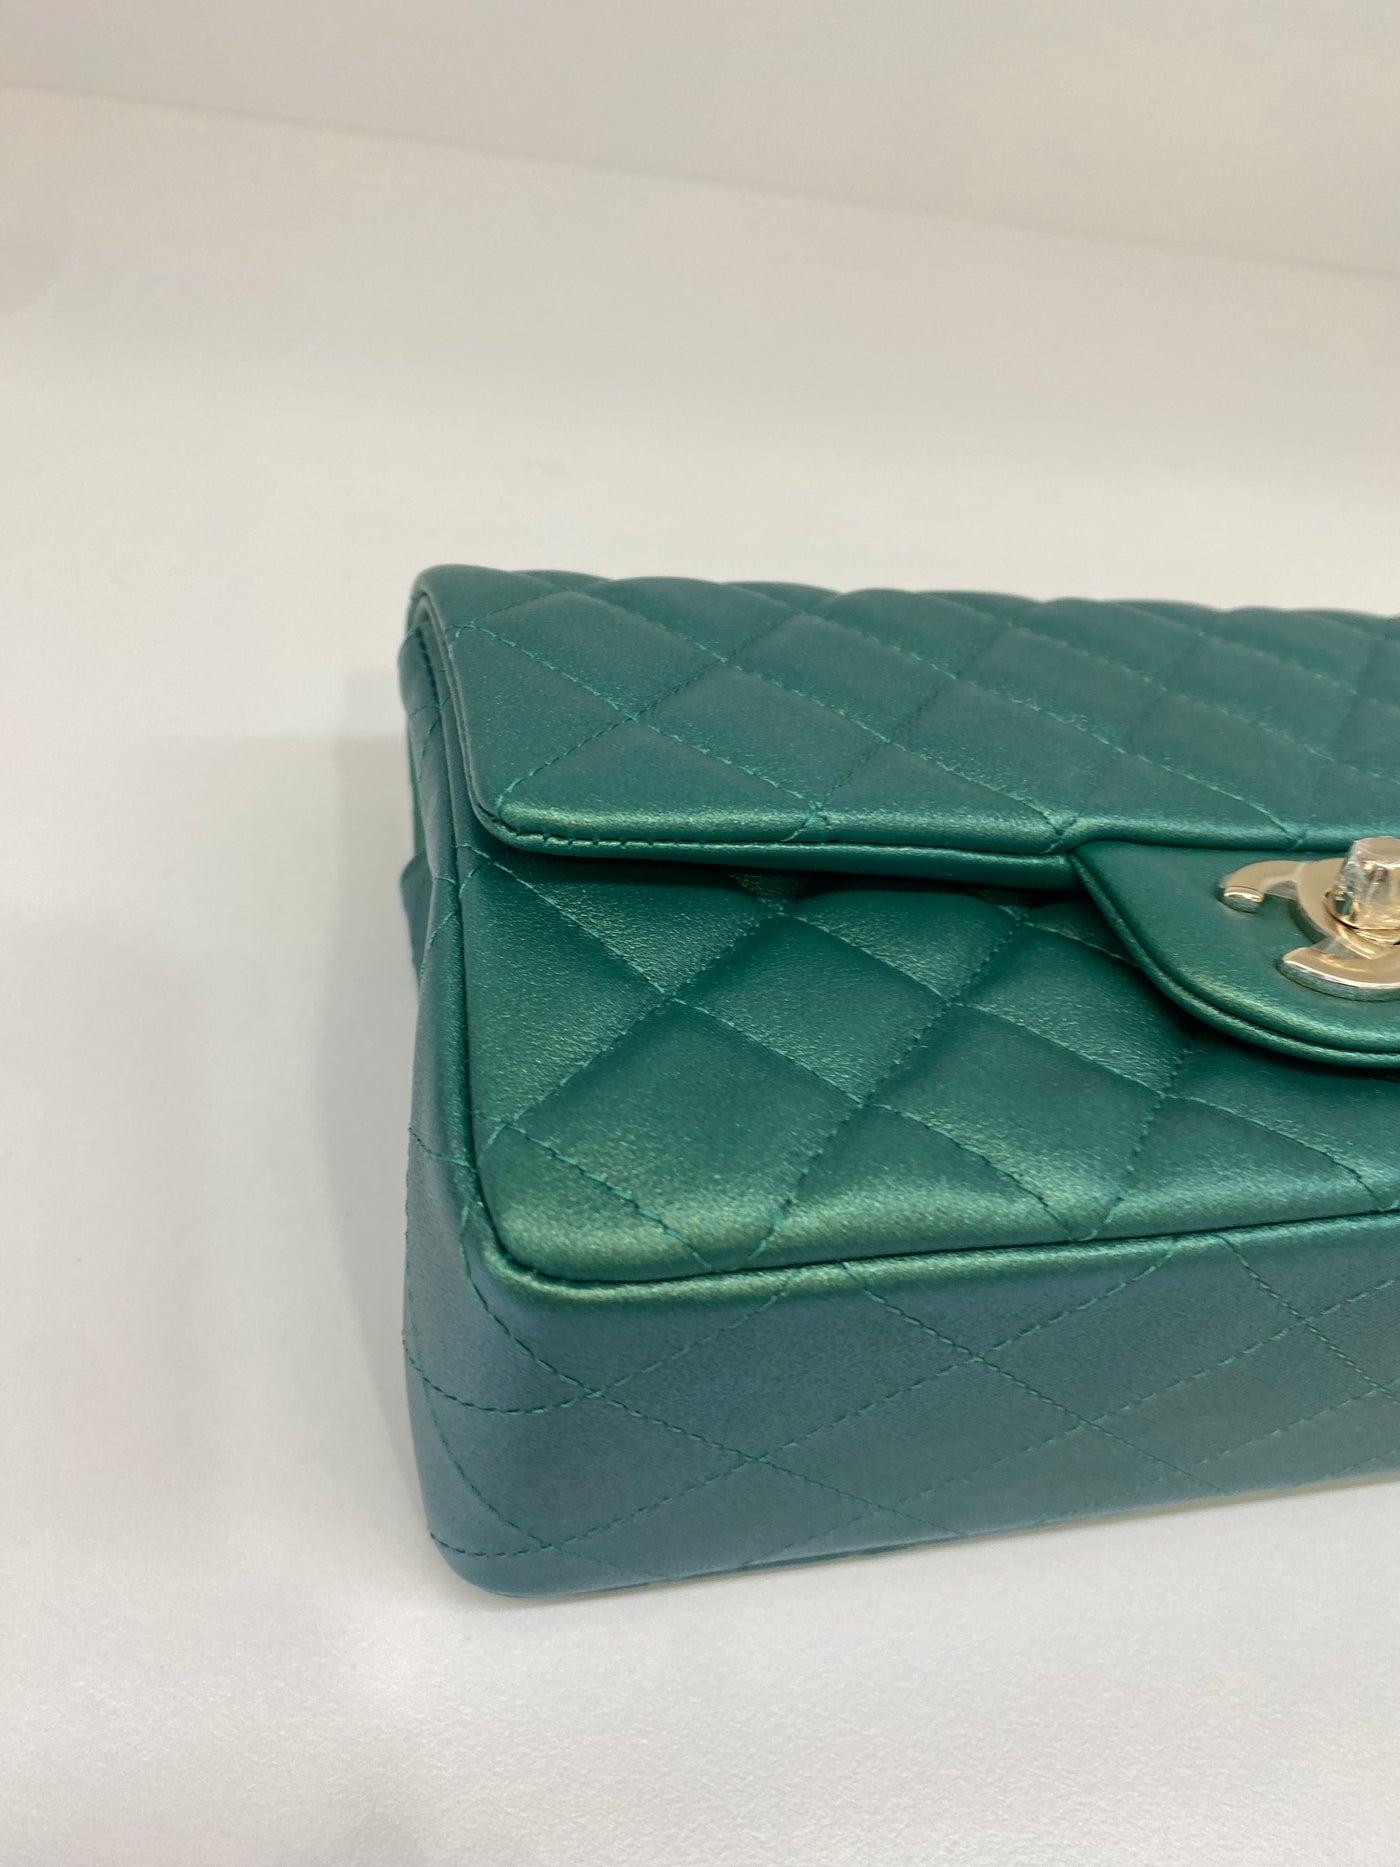 Chanel Classic Flap Mini Green